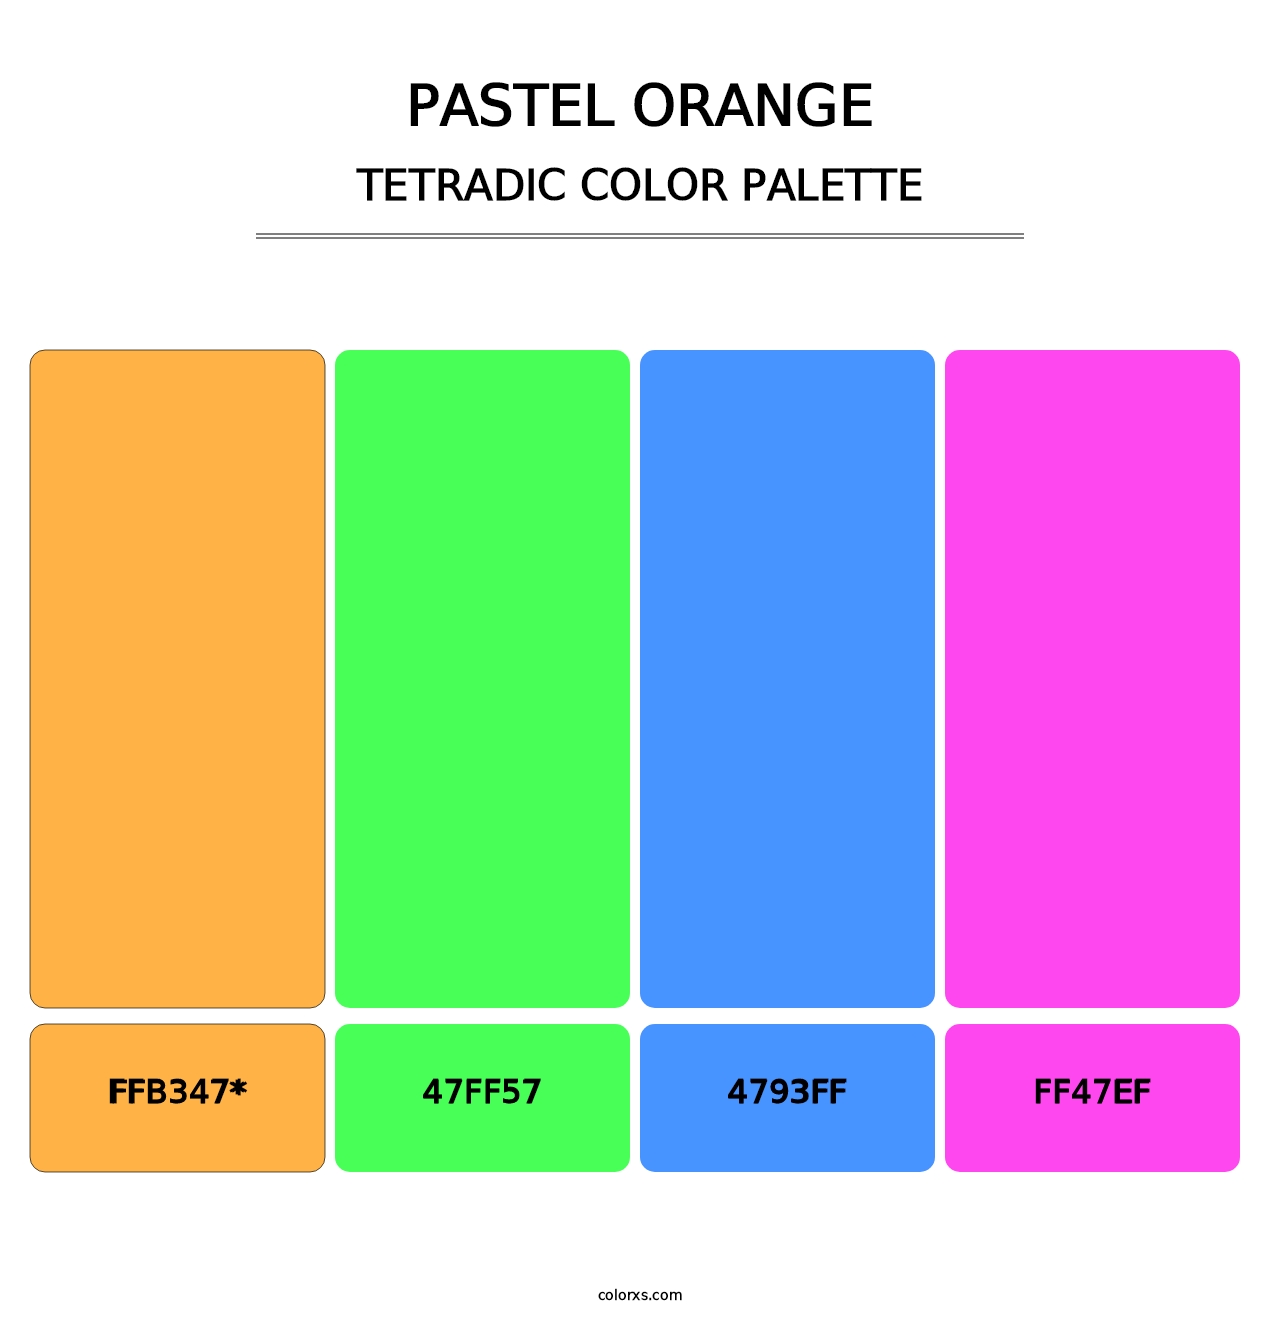 Pastel Orange - Tetradic Color Palette